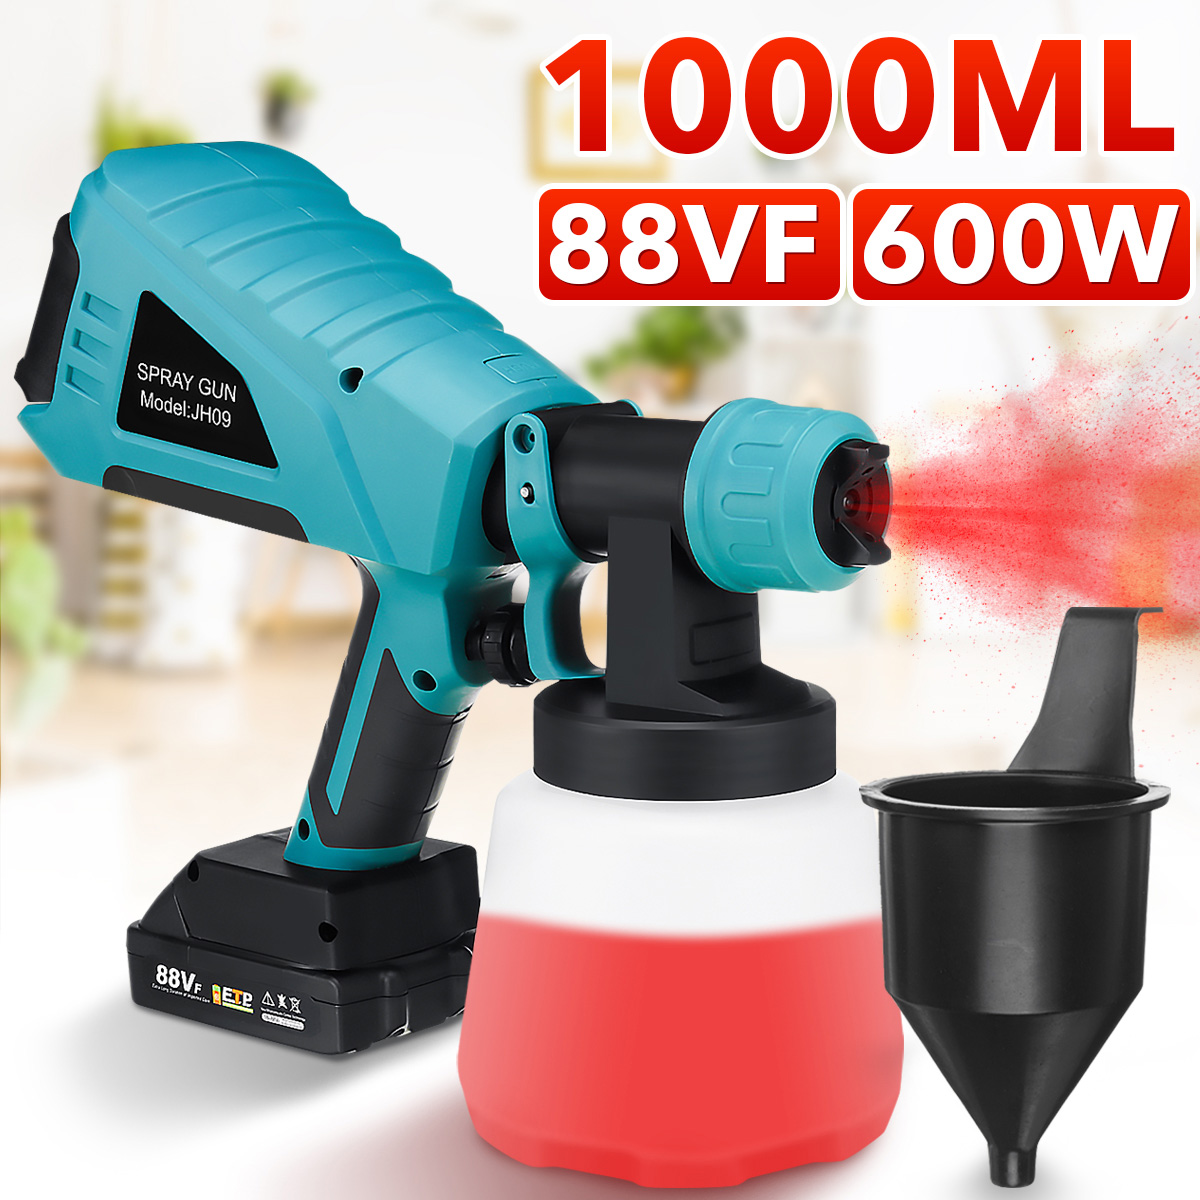 88VF-1000ML-Removable-Electric-Spray-Guns-Household-Convenience-Spray-Paint-W-Li-ion-Battery-For-Mak-1873507-2